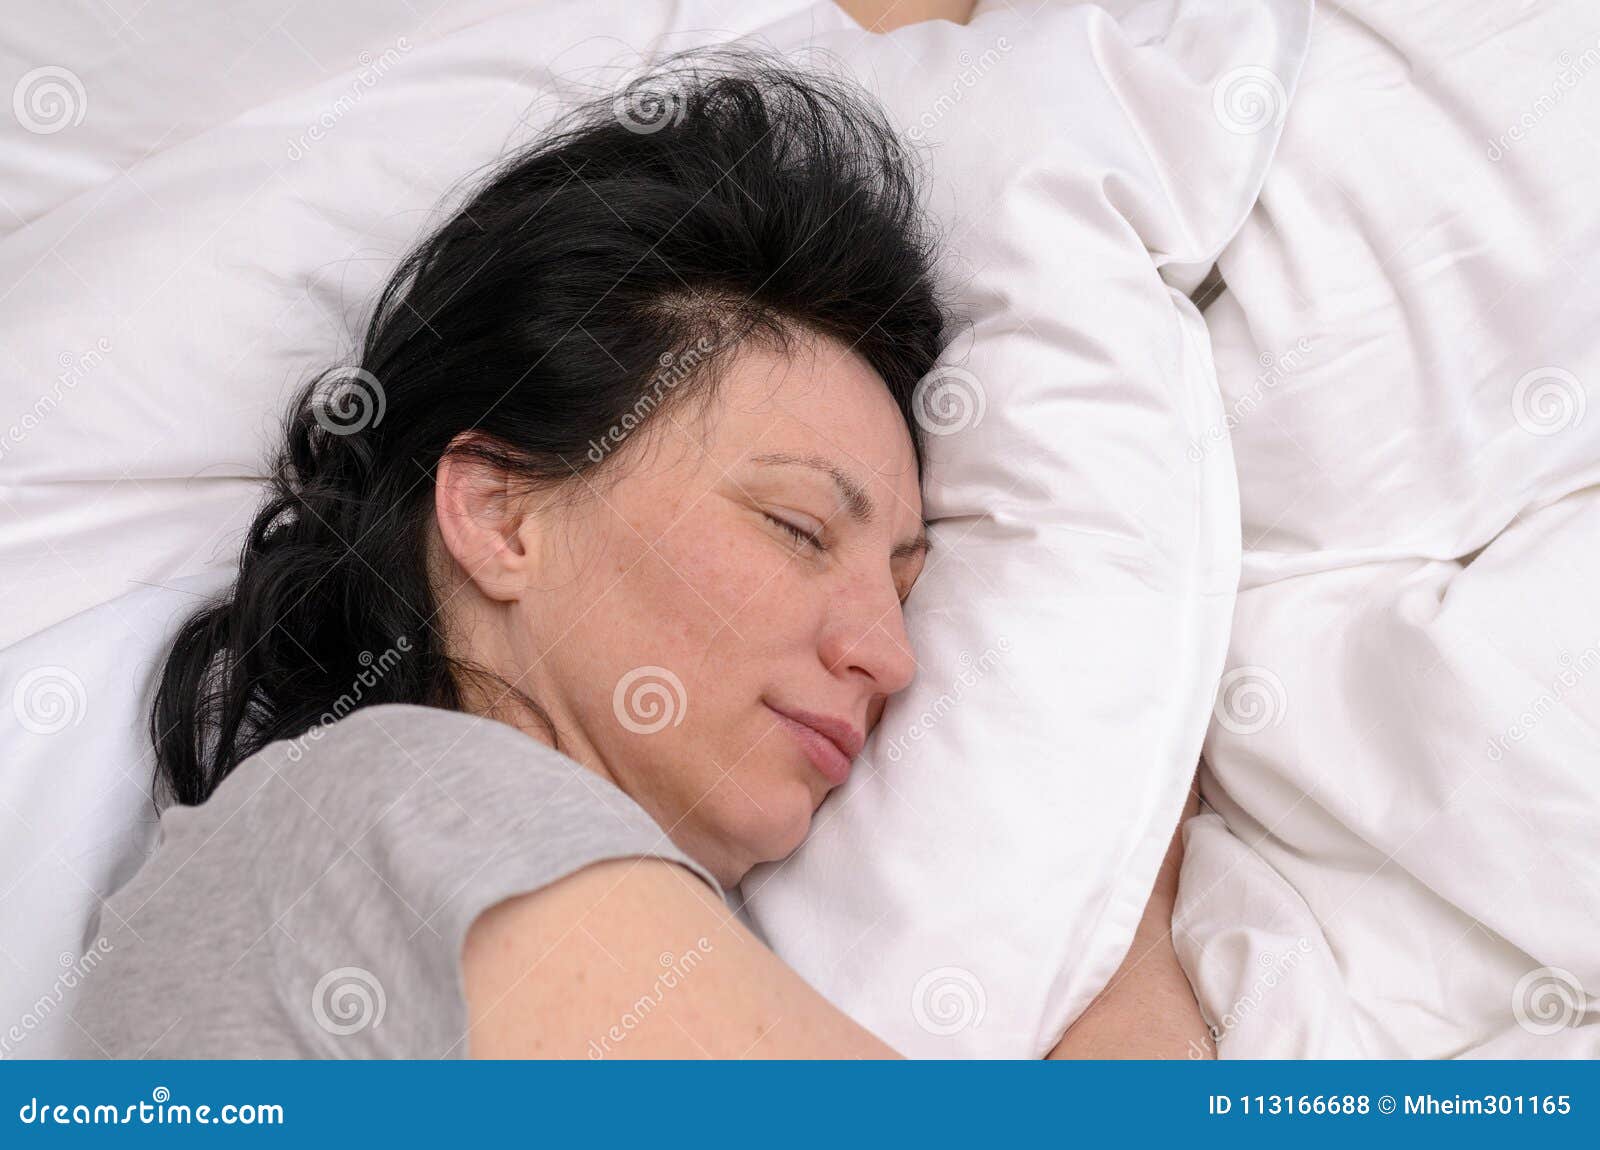 young woman enjoying a good restful sleep